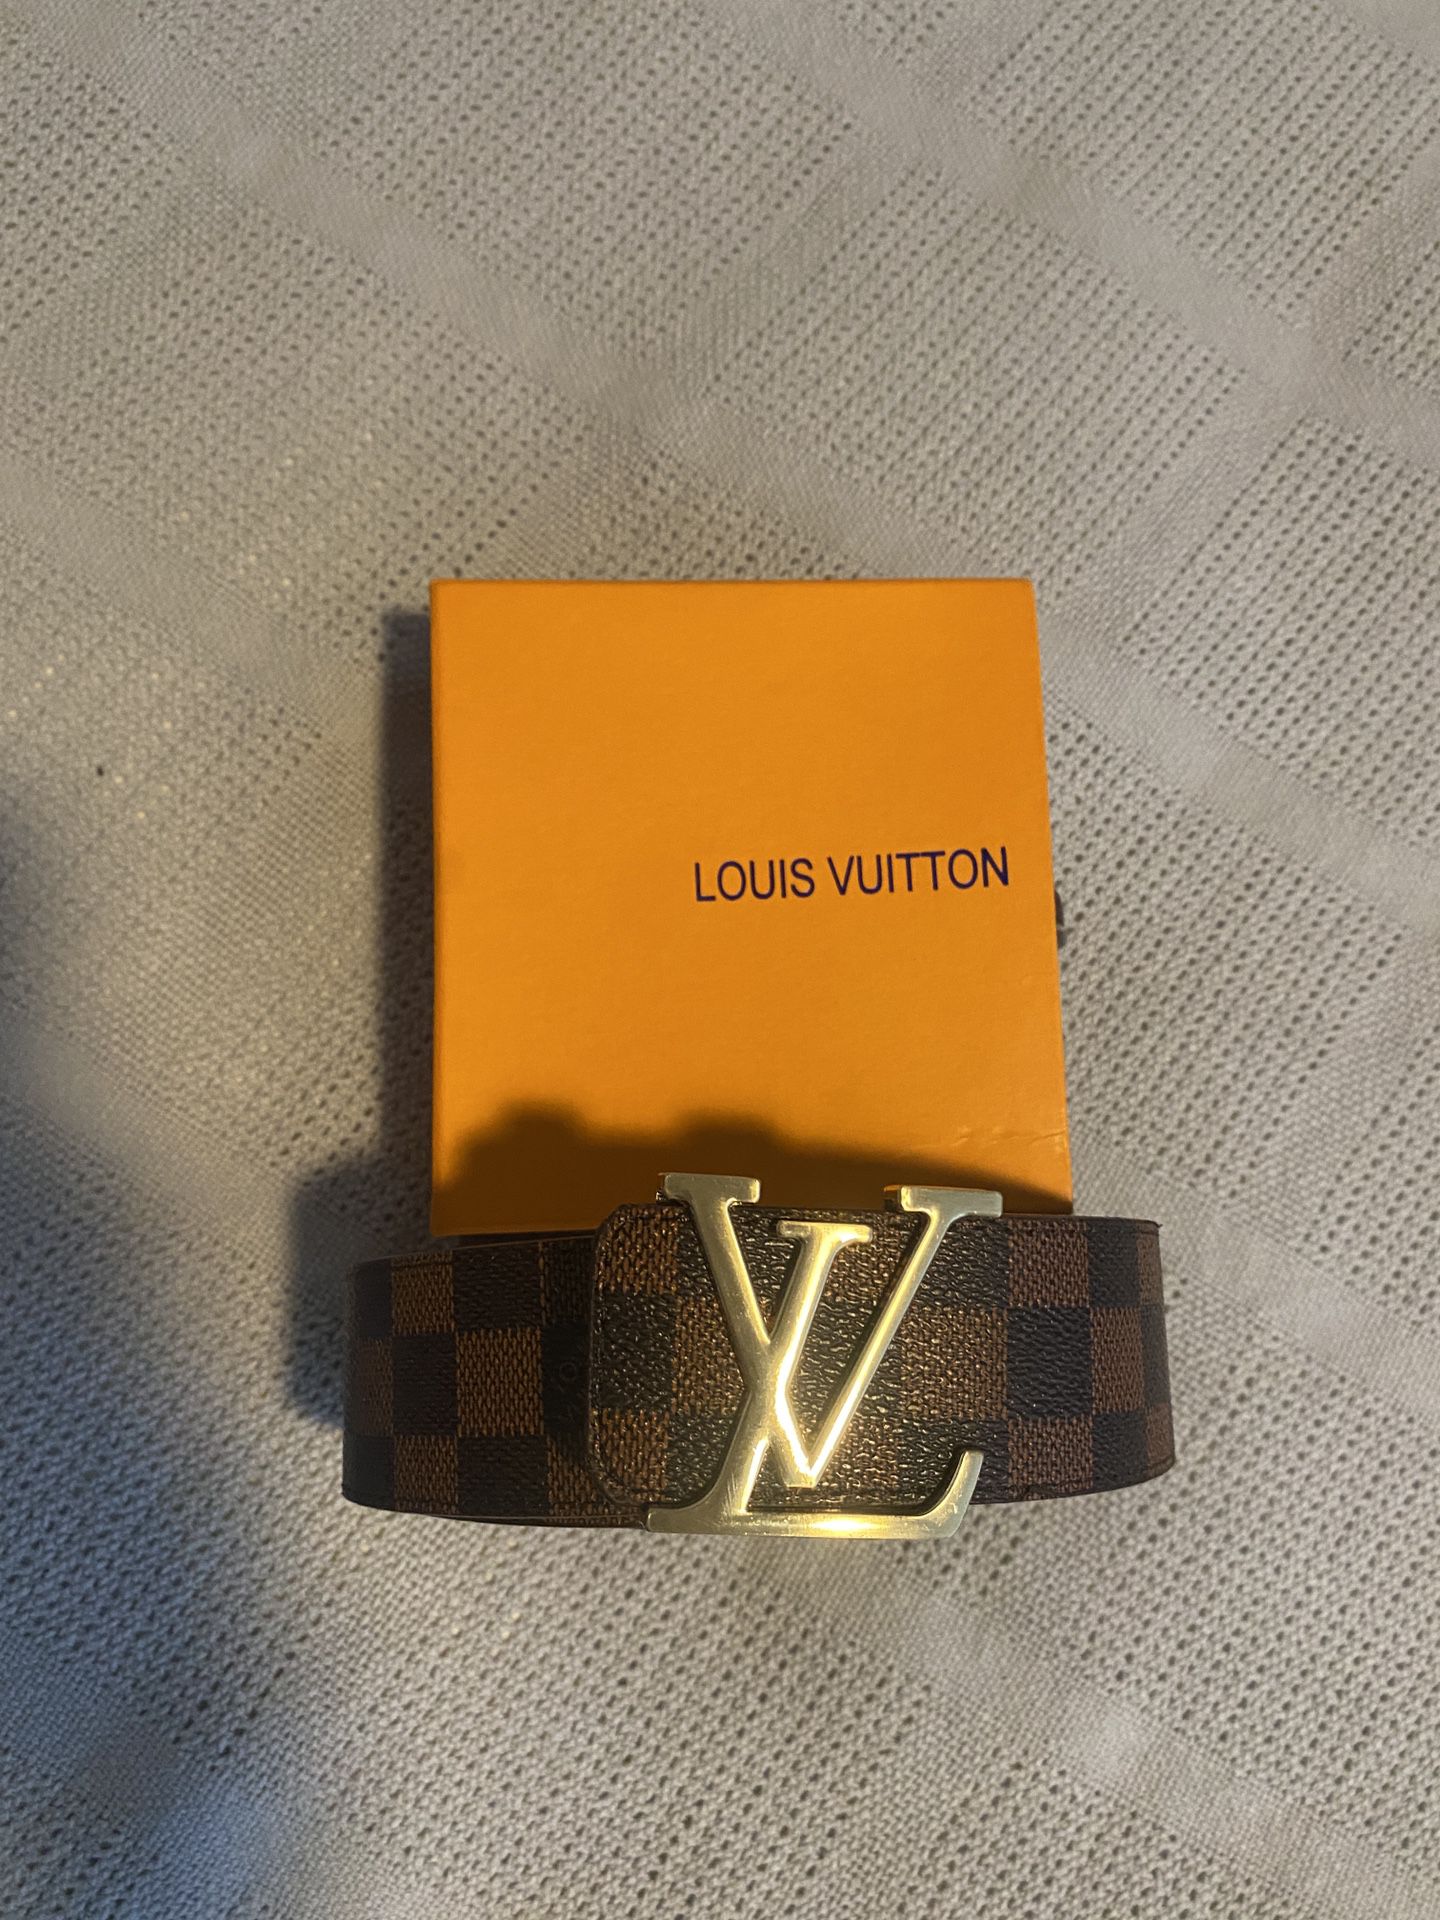 Louis Vuitton Garment Bag LV for Sale in Albuquerque, NM - OfferUp